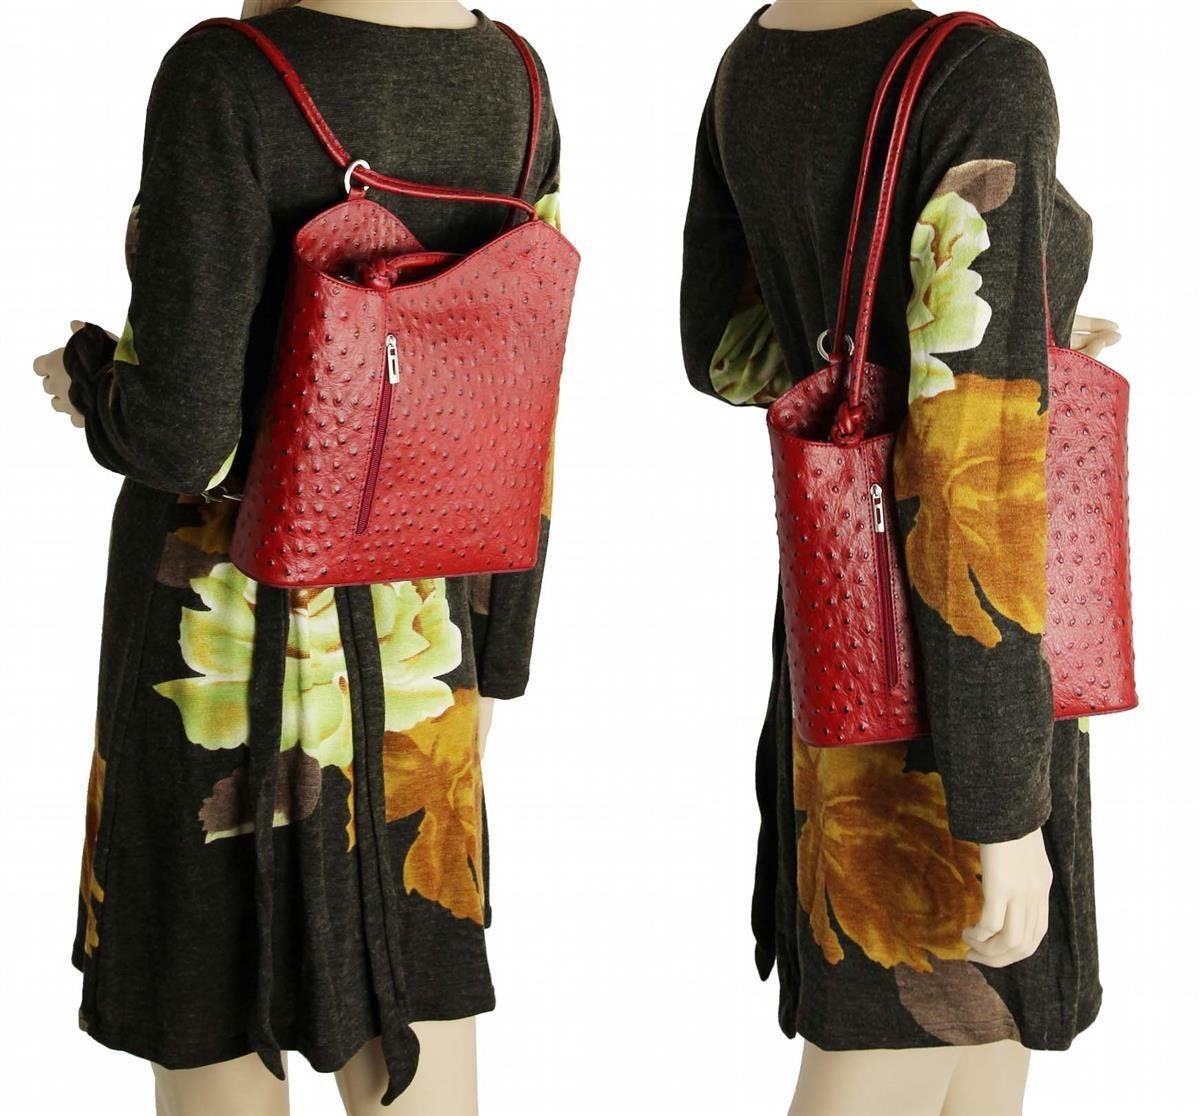 Made Damen Rucksack Schultertasche, Italy Rucksack Tasche Leder ITALYSHOP24 & in Handtasche/Schultertasche als tragbar